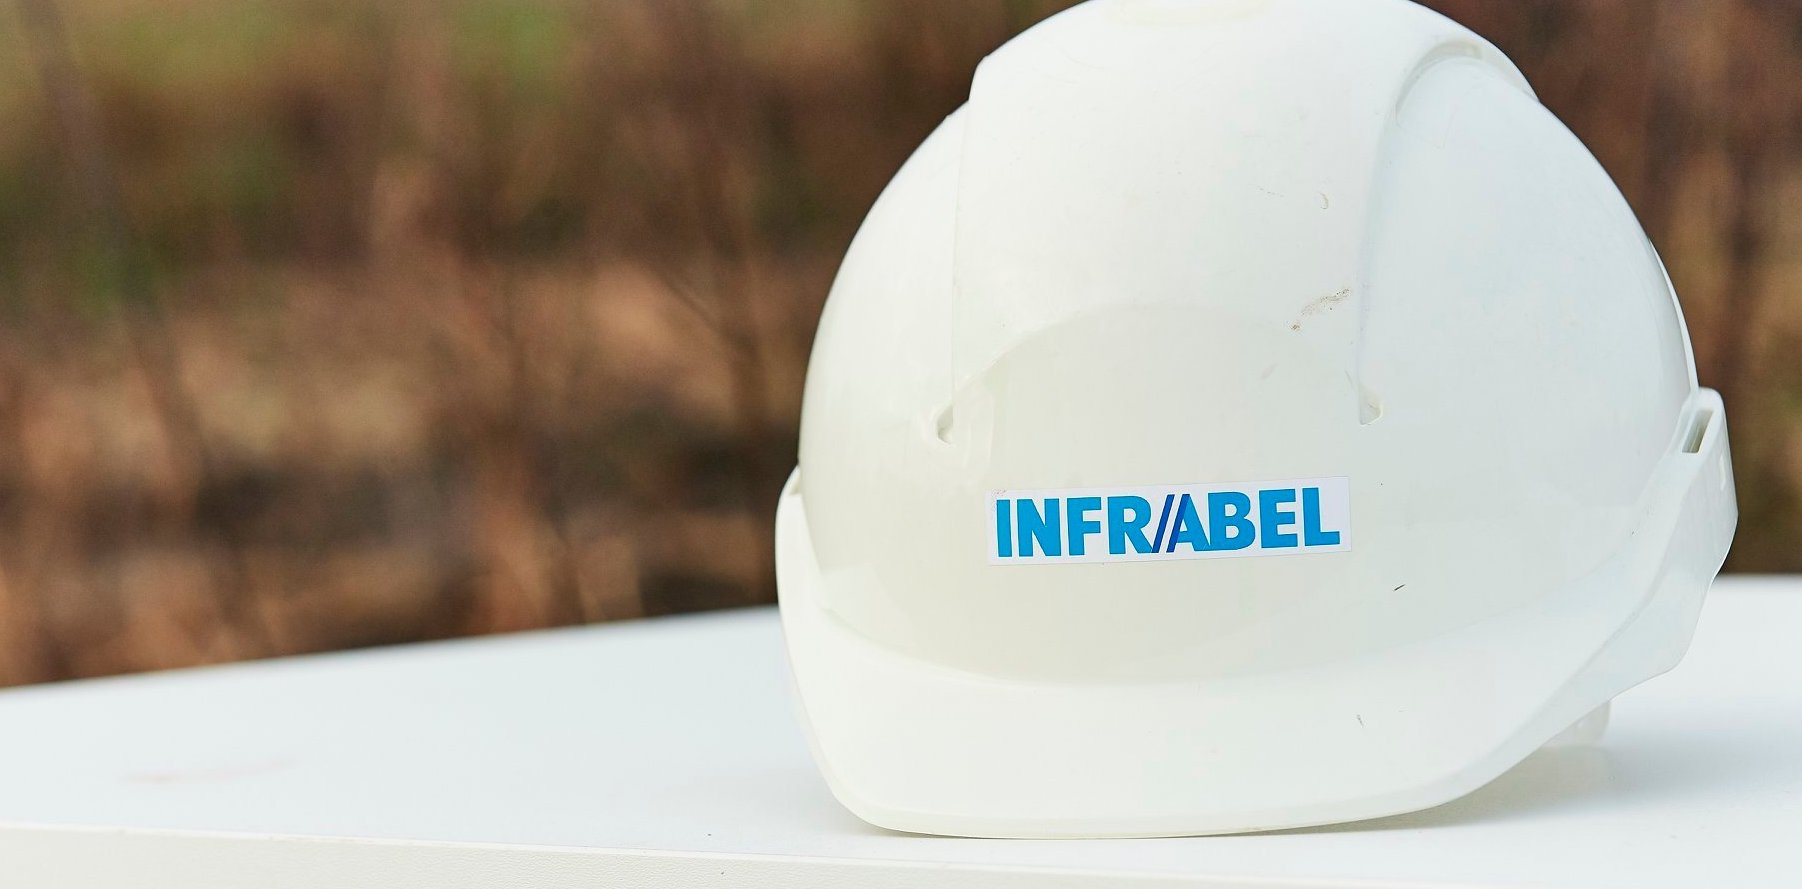 Infrabel trusts Semetis for the complete management of its media, online & offline!